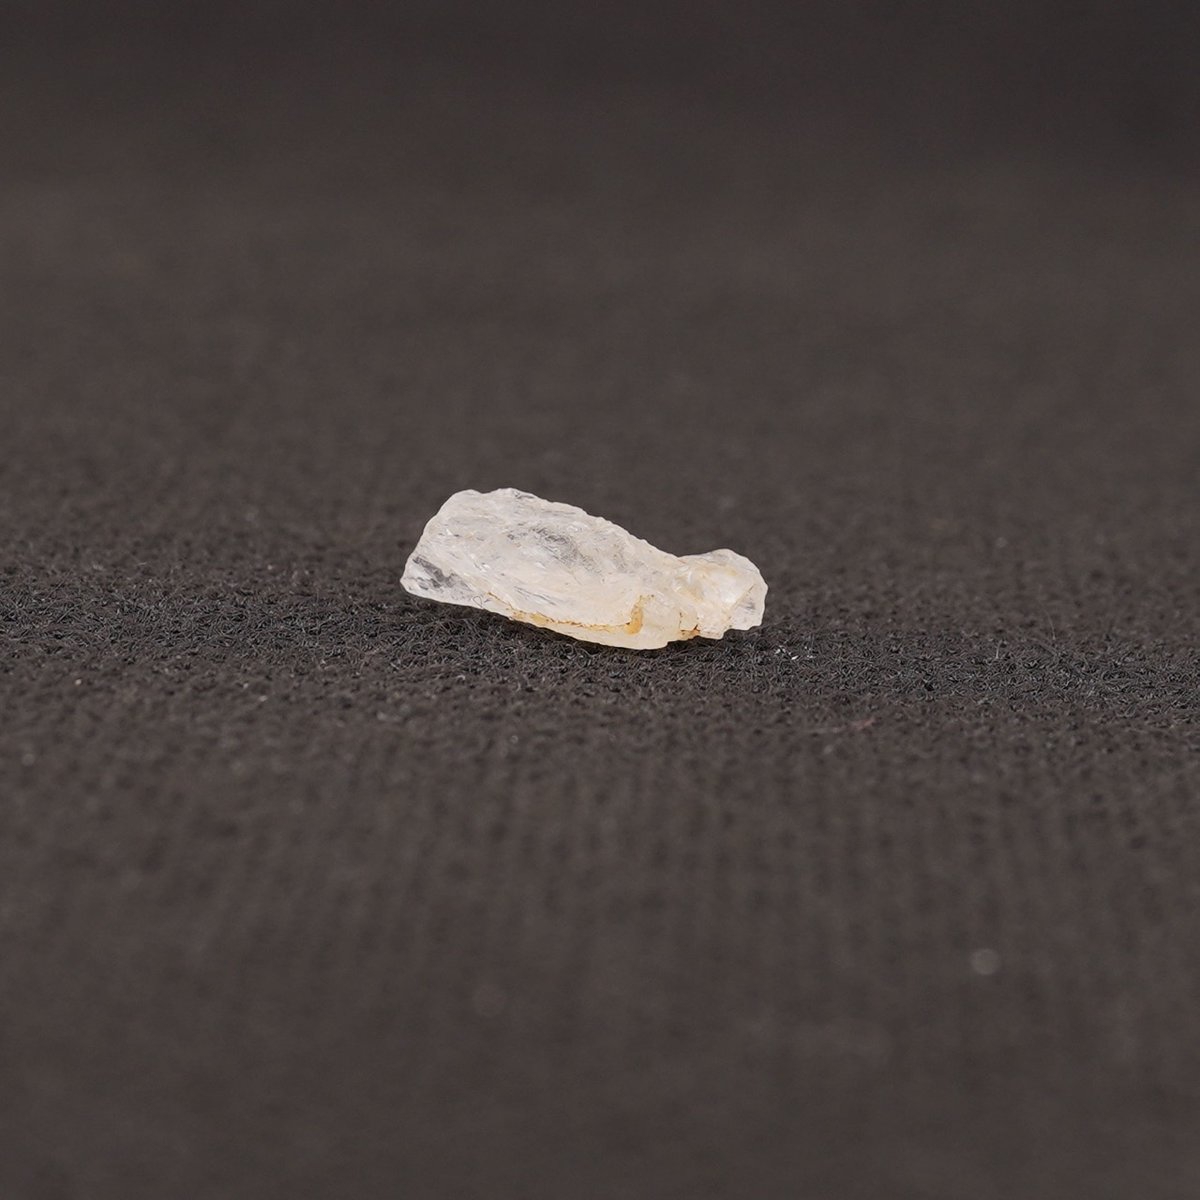 Fenacit nigerian cristal natural unicat f216